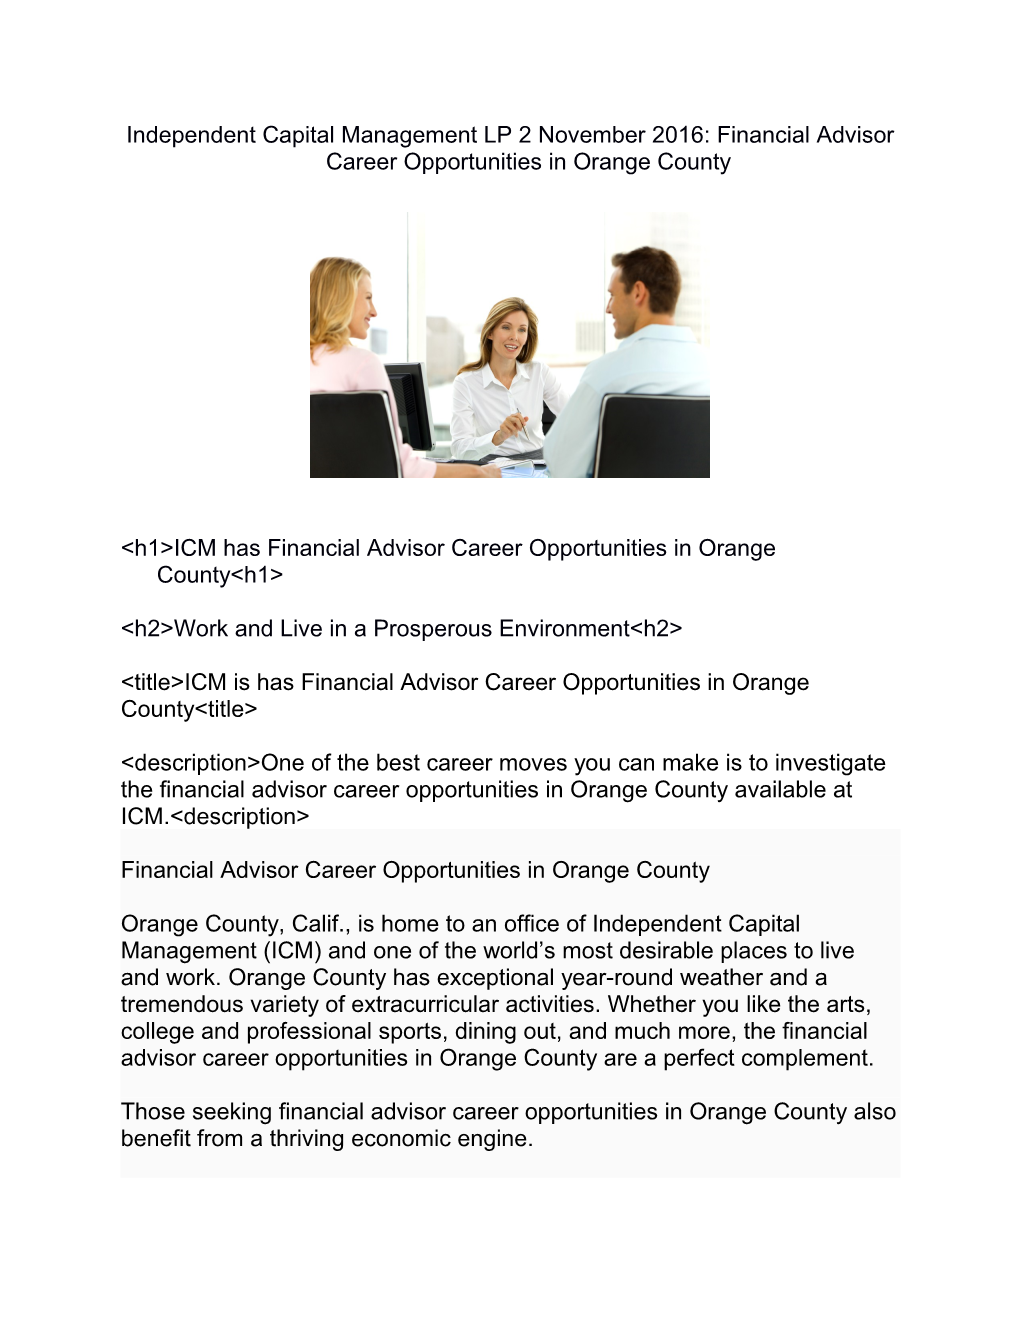 &lt;H1&gt;ICM Has Financial Advisor Career Opportunities in Orange County&lt;H1&gt;